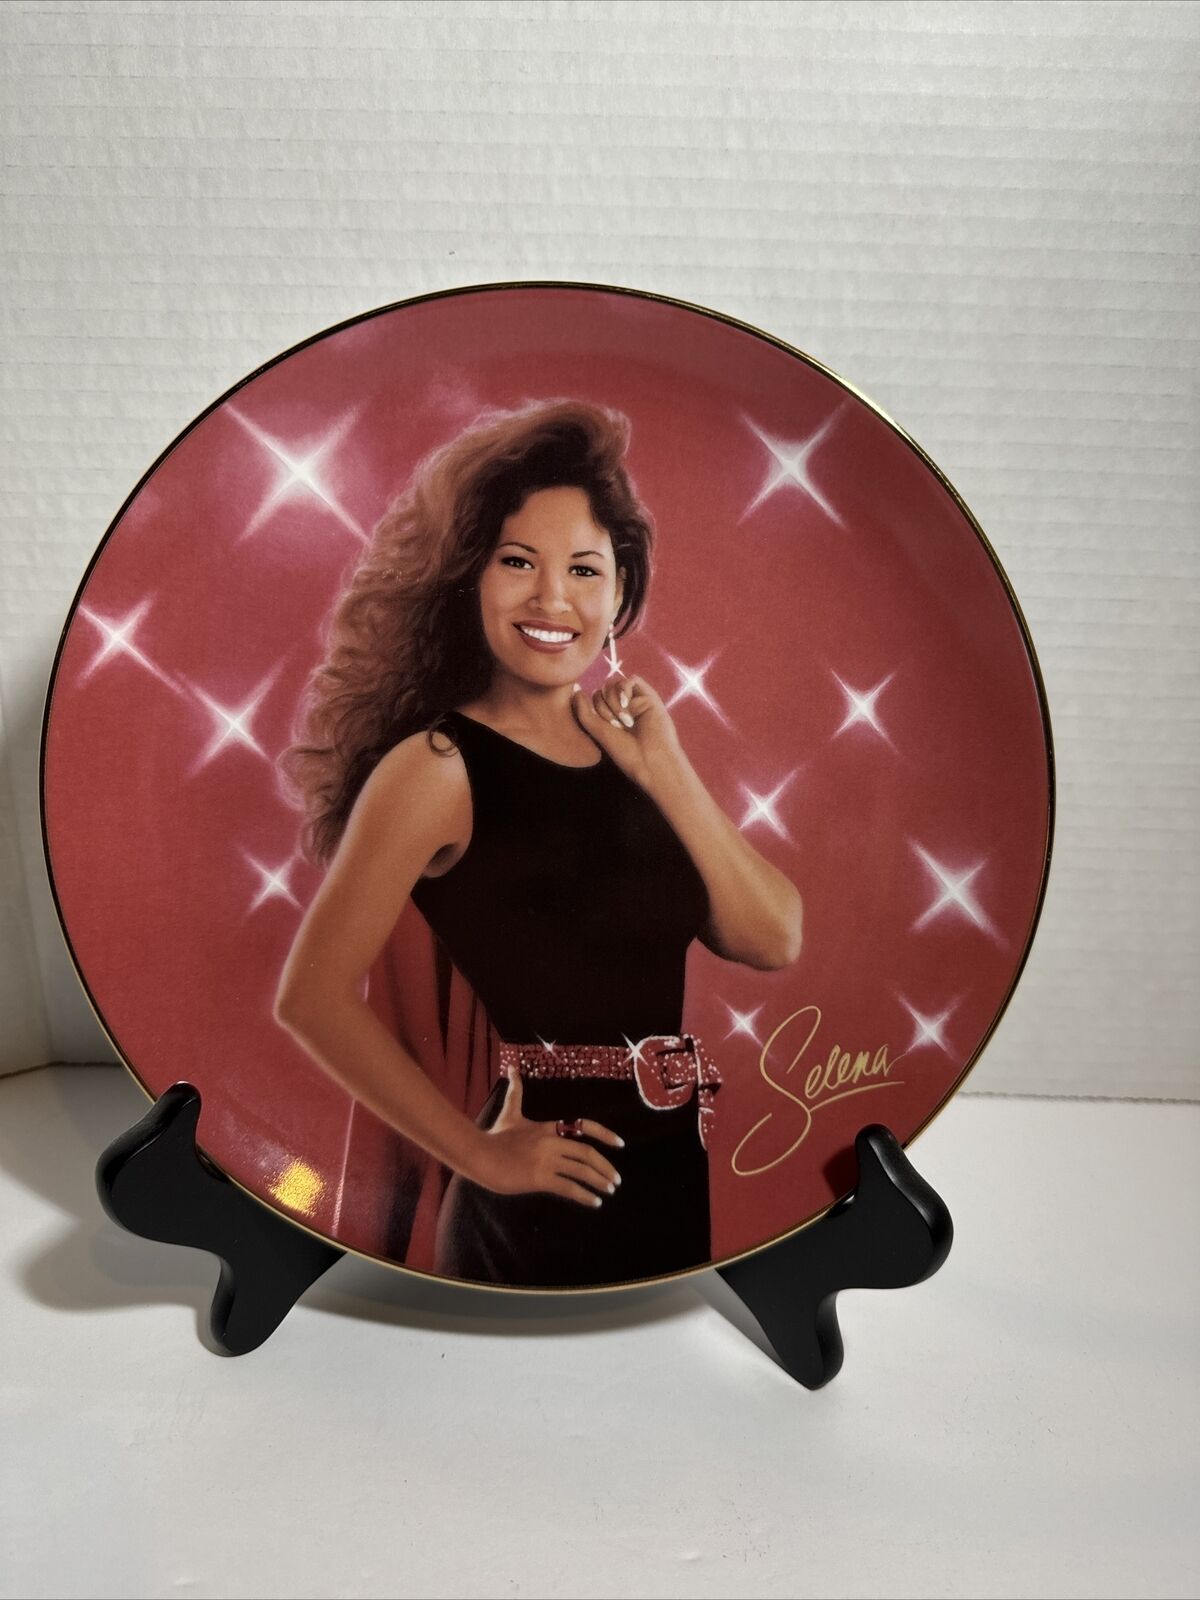 Selena Tribute 1996 Bradford Exchange “Selena Forever” Plate No. 6611A RARE